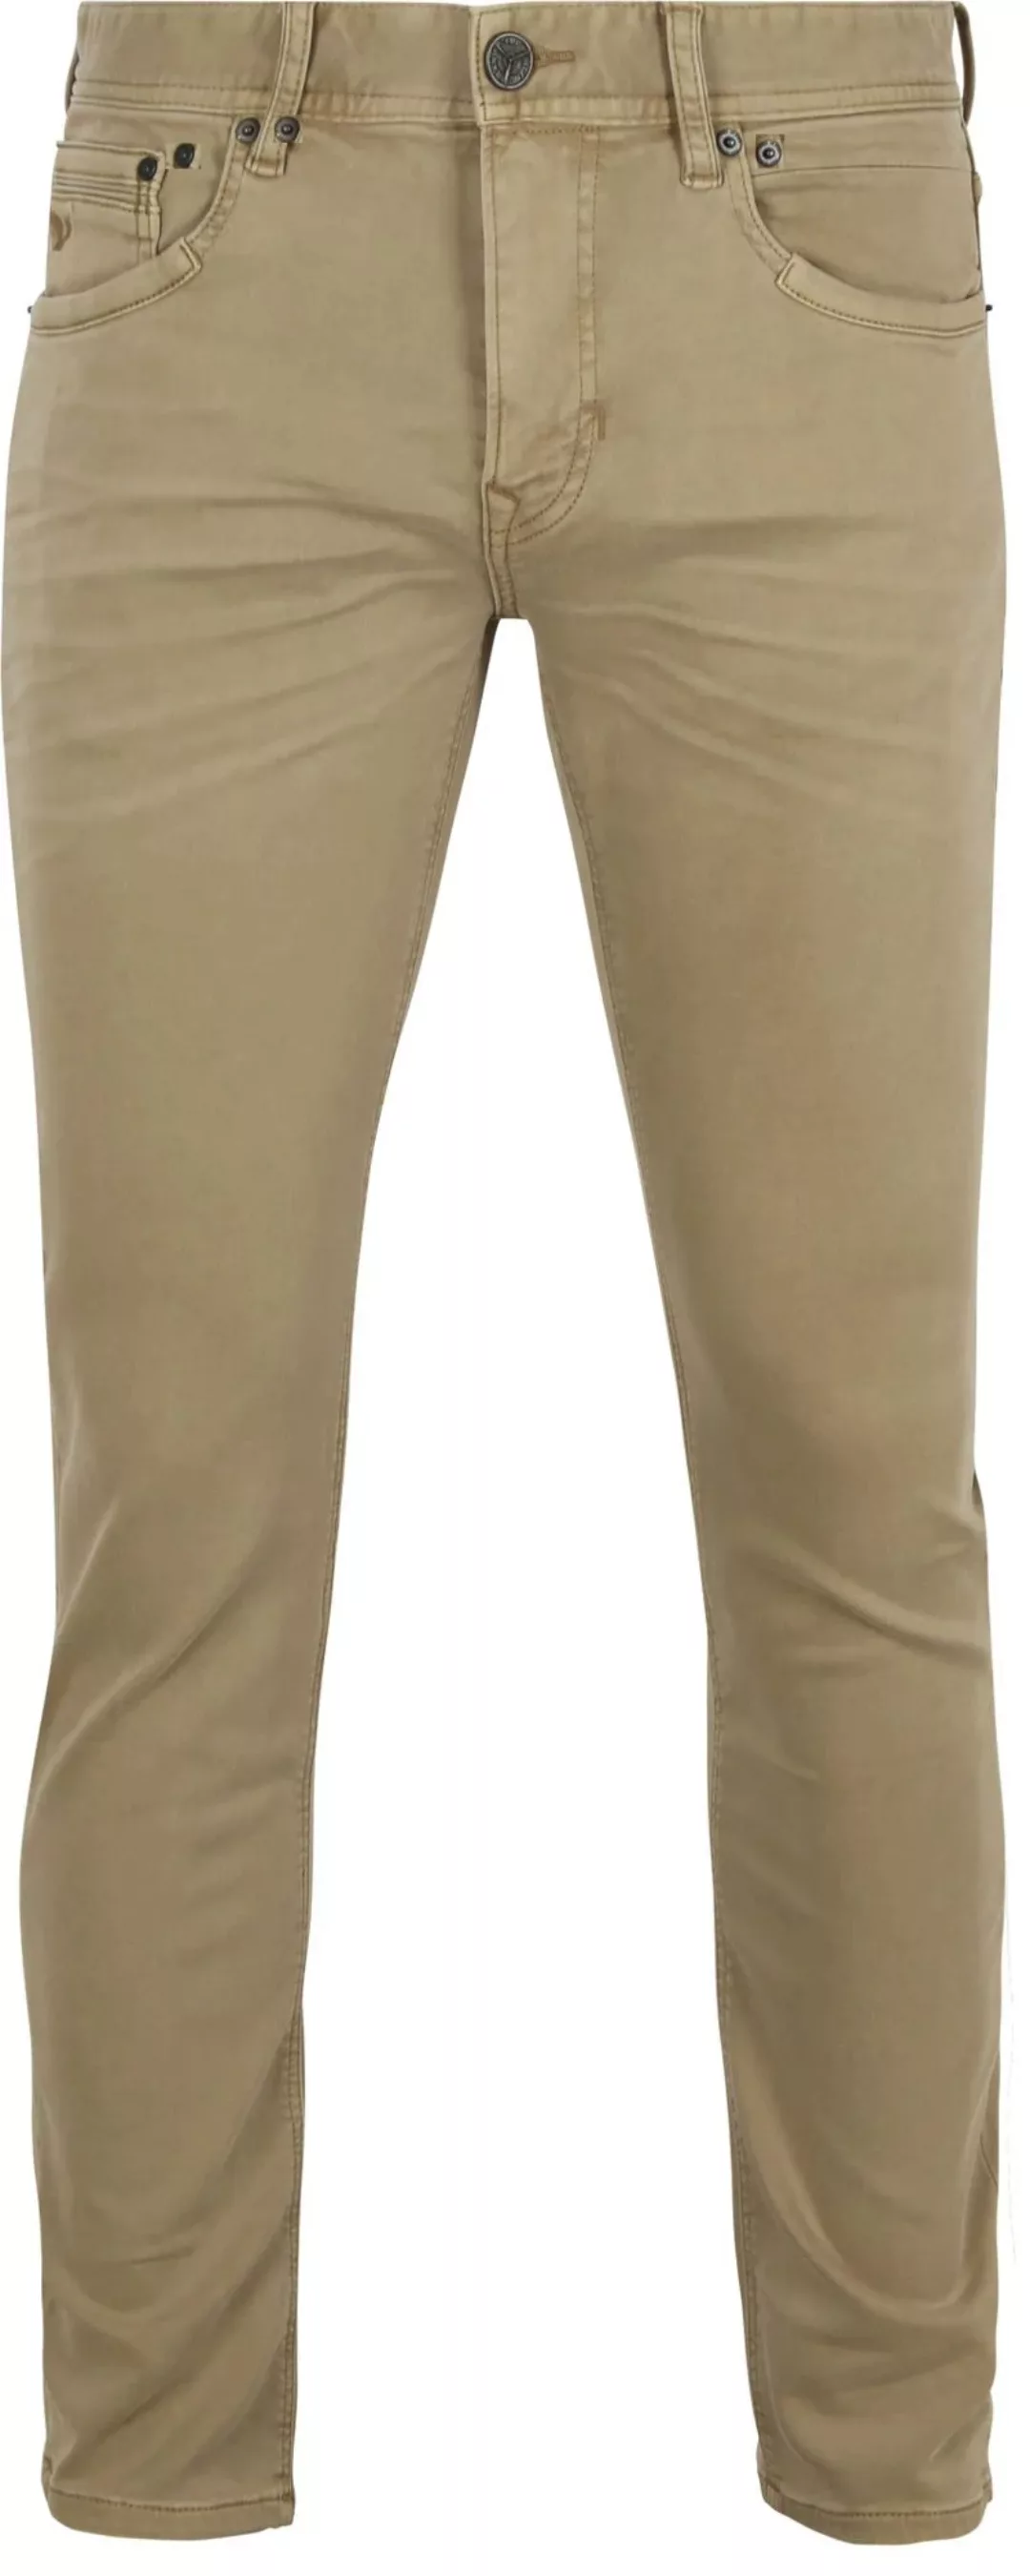 PME Legend Tailwheel Jeans Khaki - Größe W 31 - L 32 günstig online kaufen